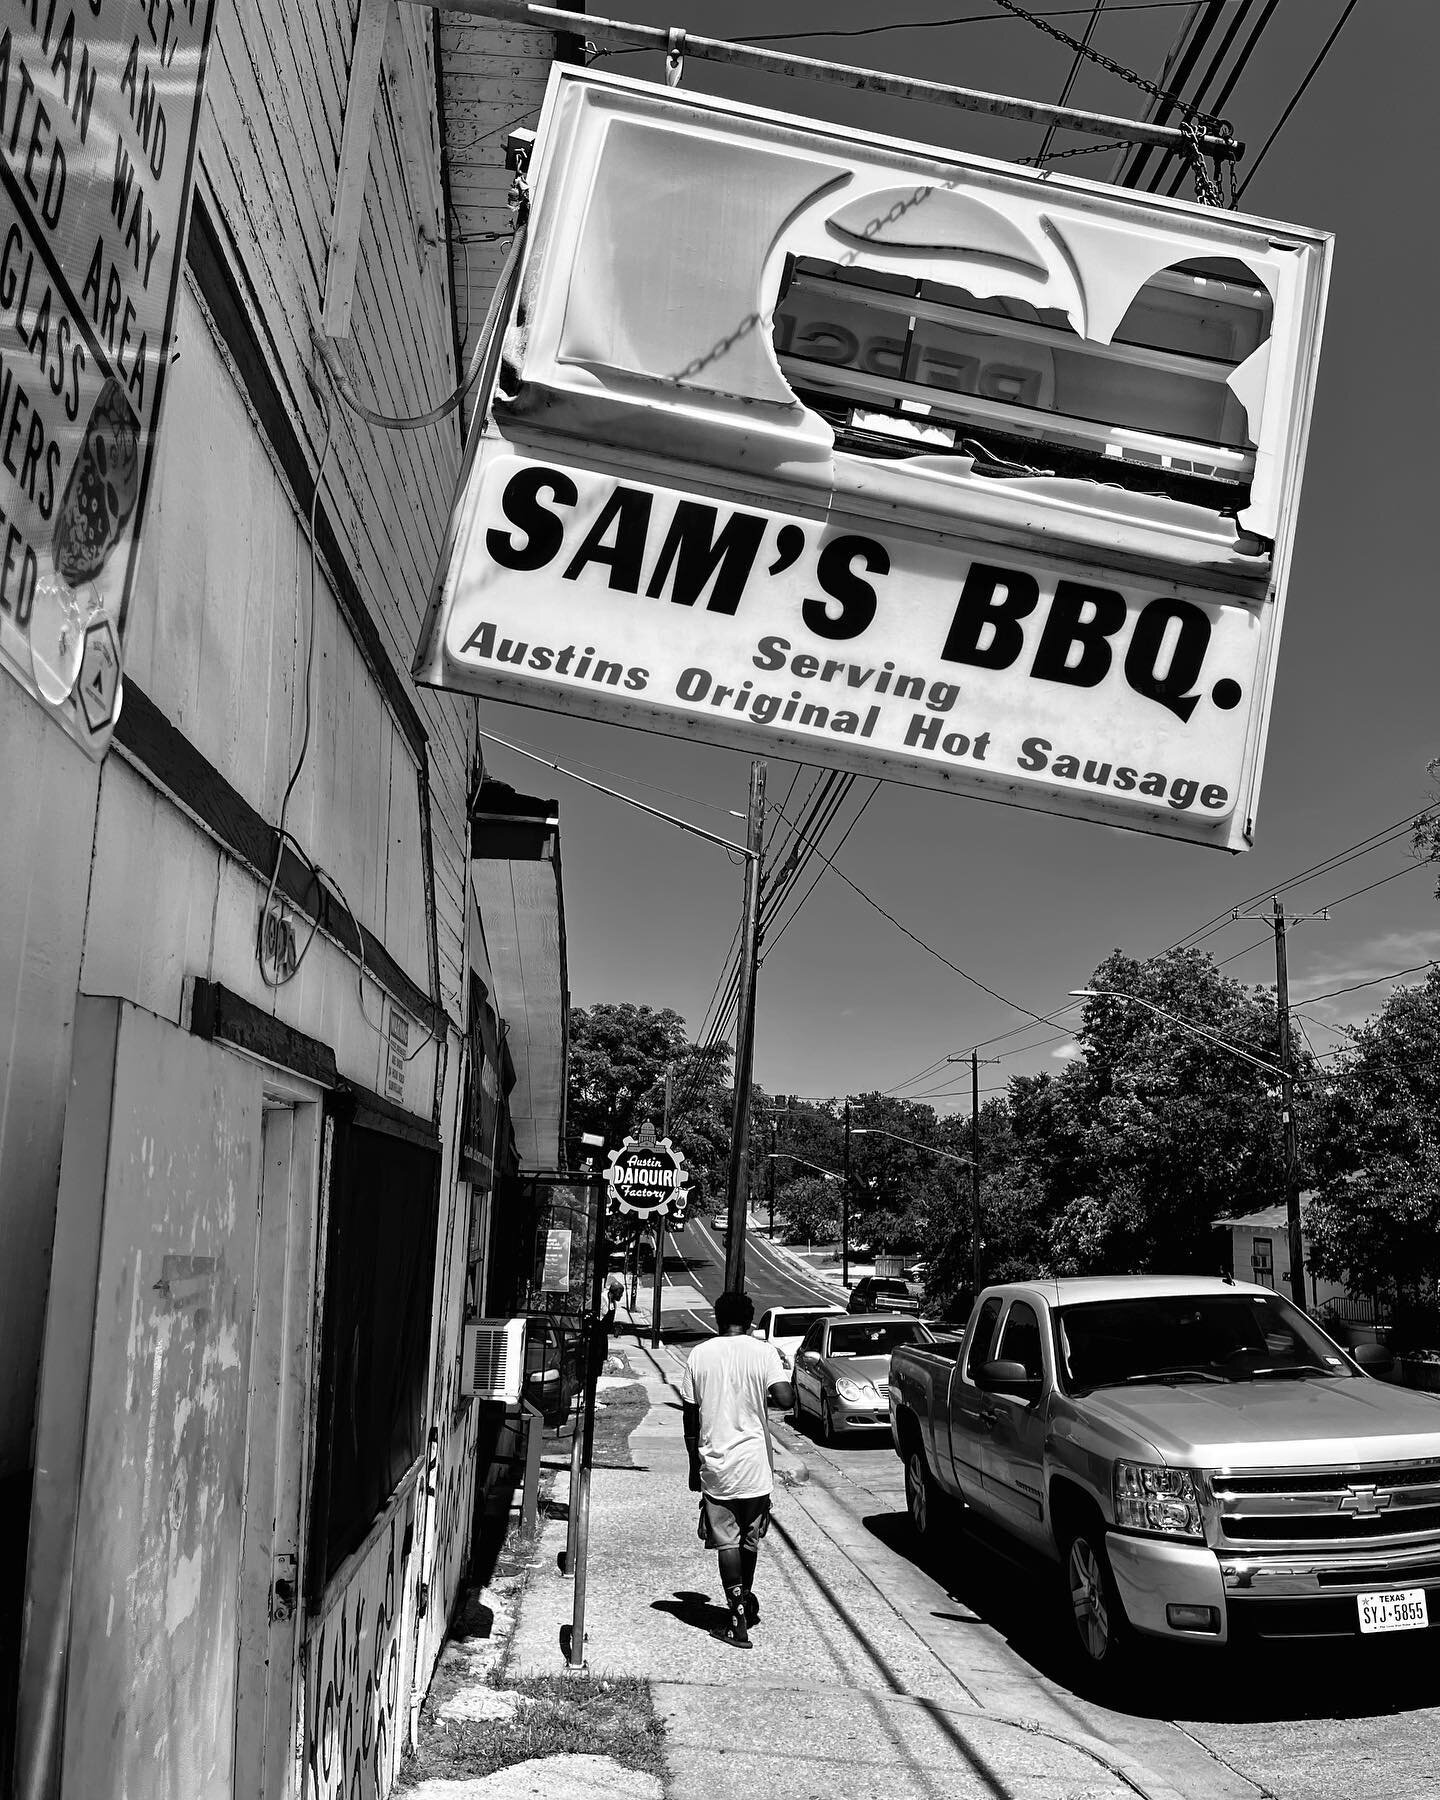 Lunchtime, Austin TX . 
.
.
#austintexas #texas #ribs #bnw #bnwphotography #bnwmood #bnwsouls #bnwzone #bnwphoto #bnwlife #bnwportrait #bnw_captures #bnw_greatshots #burnmagazine #burndiary